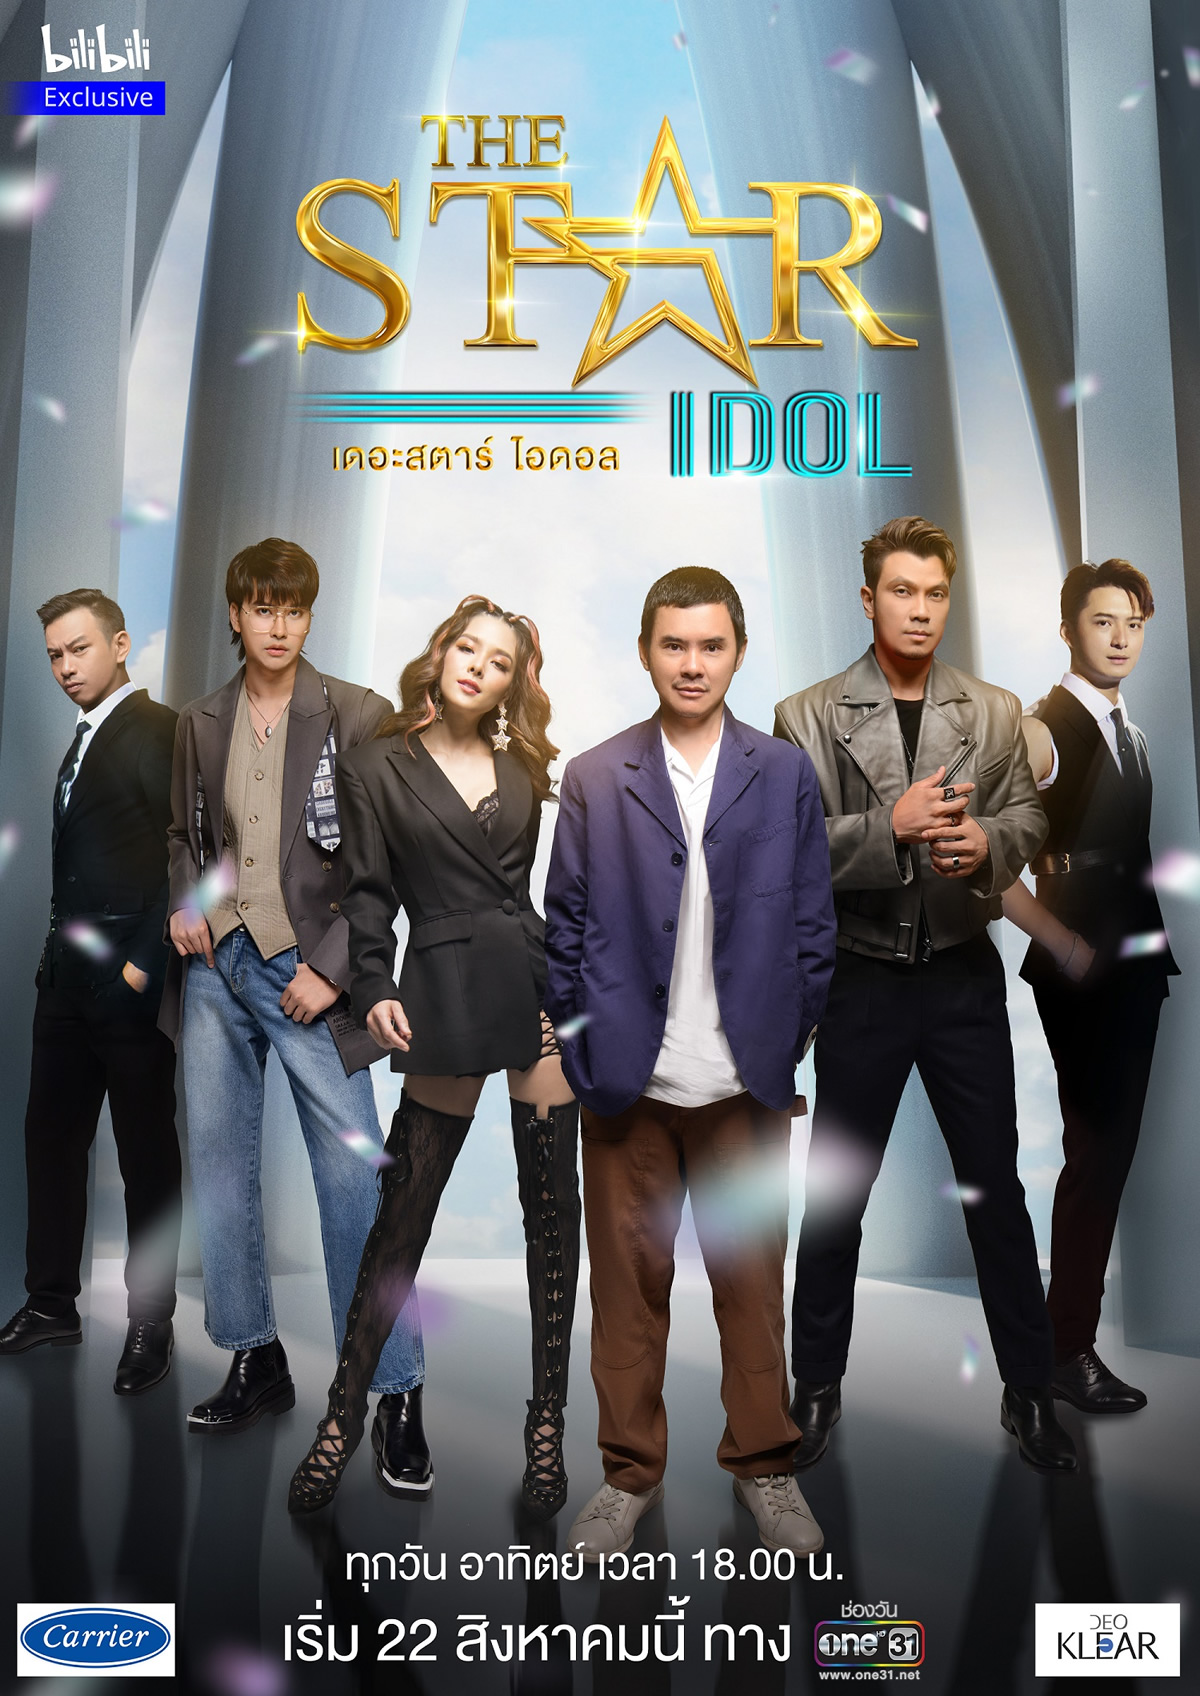 「Bilibili」がコンテンツ強化、タイのバラエティ番組「THE STAR IDOL」を配信